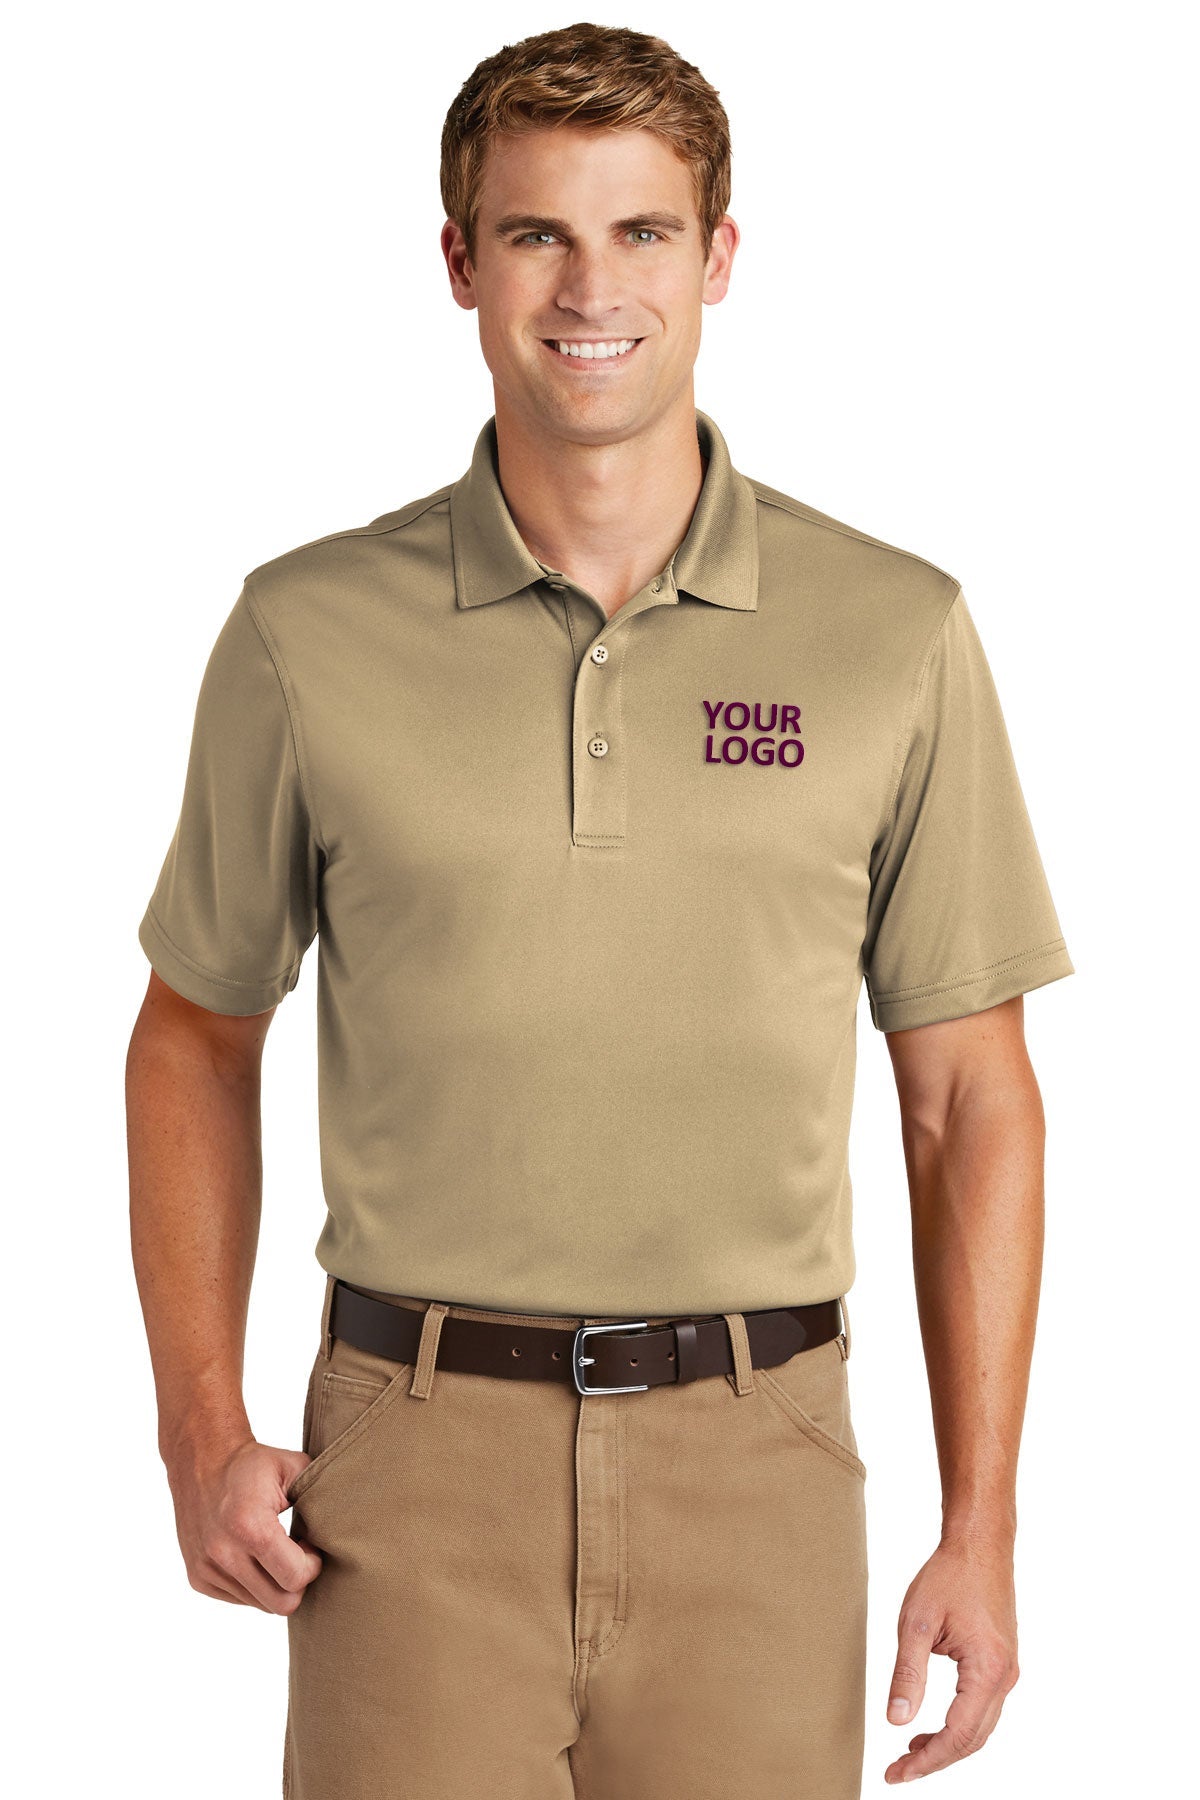 CornerStone Tan CS412 company polo shirts embroidered